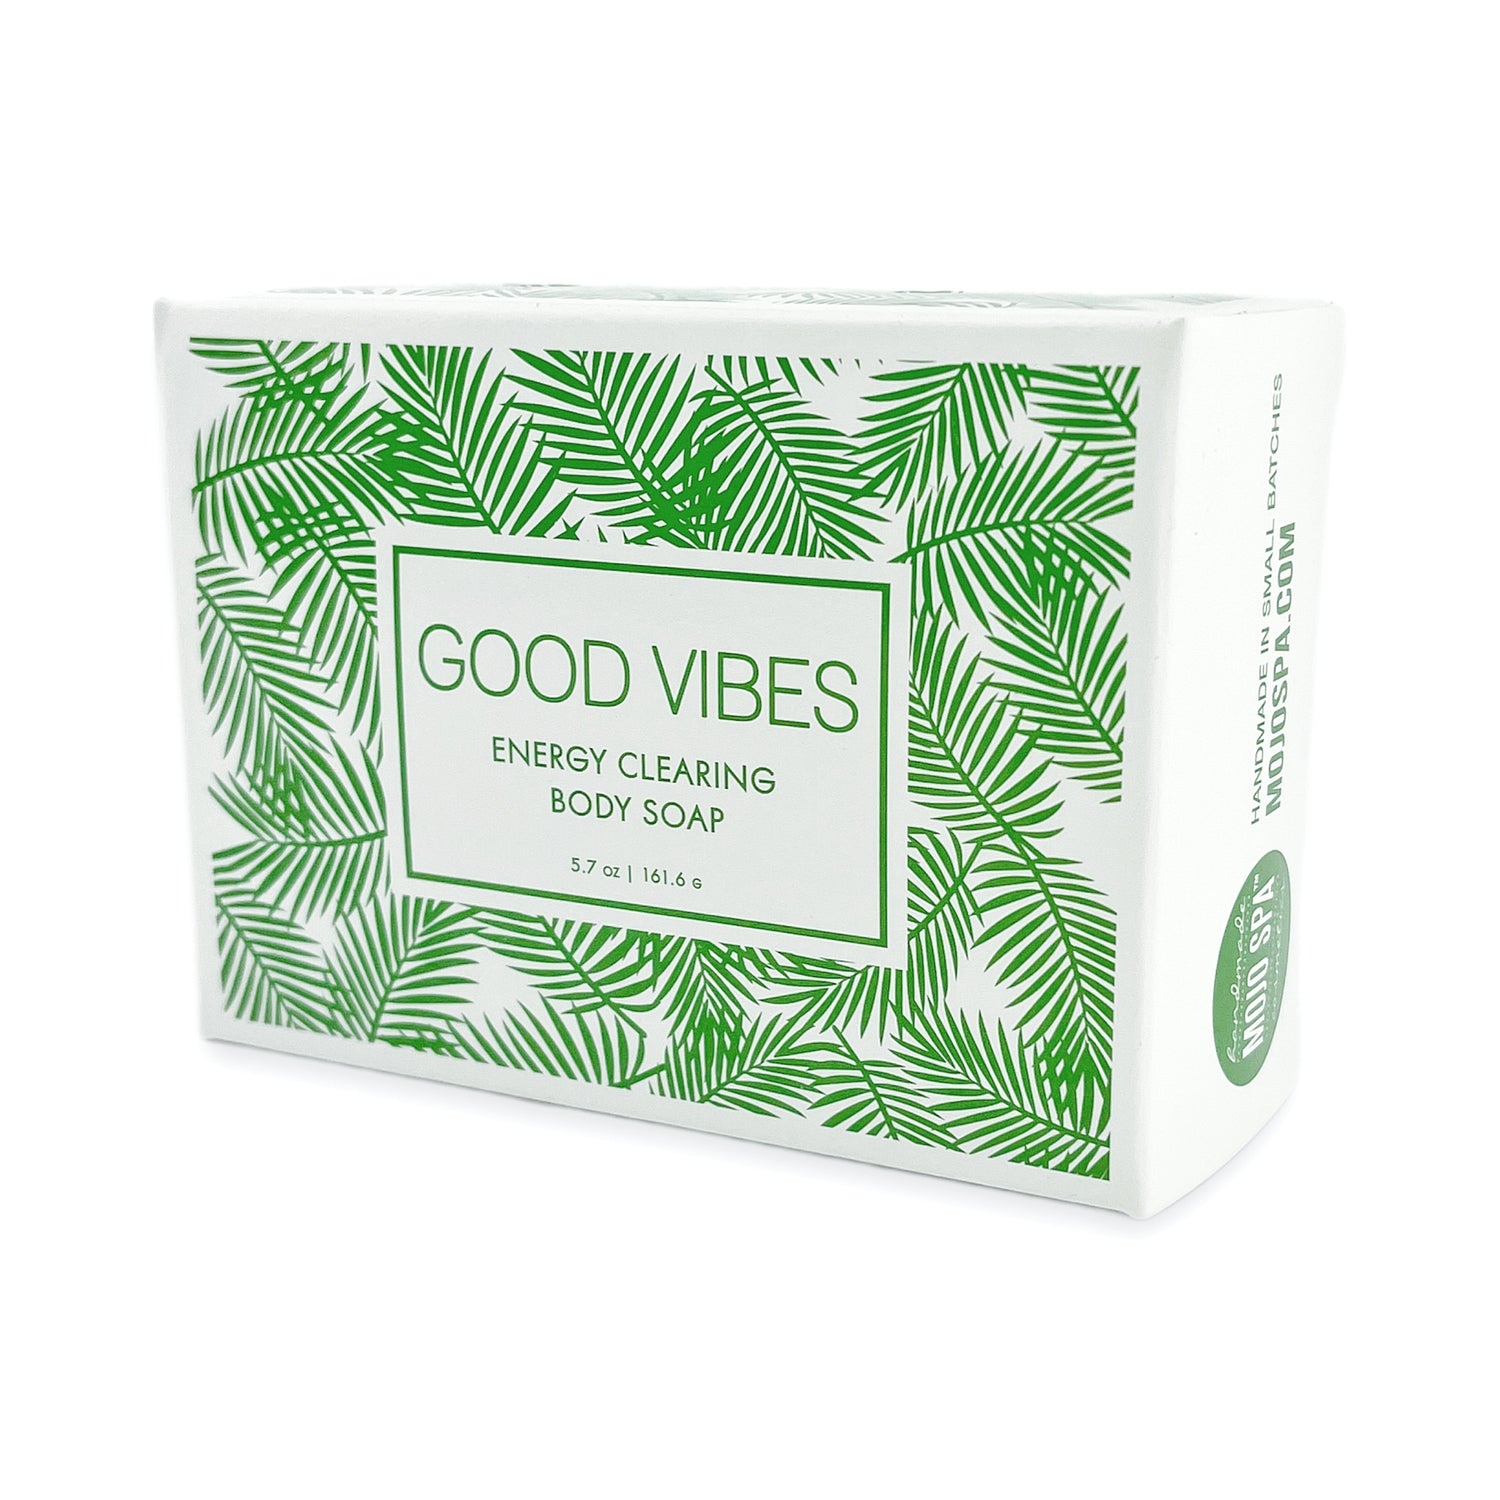 Good Vibes Body Soap